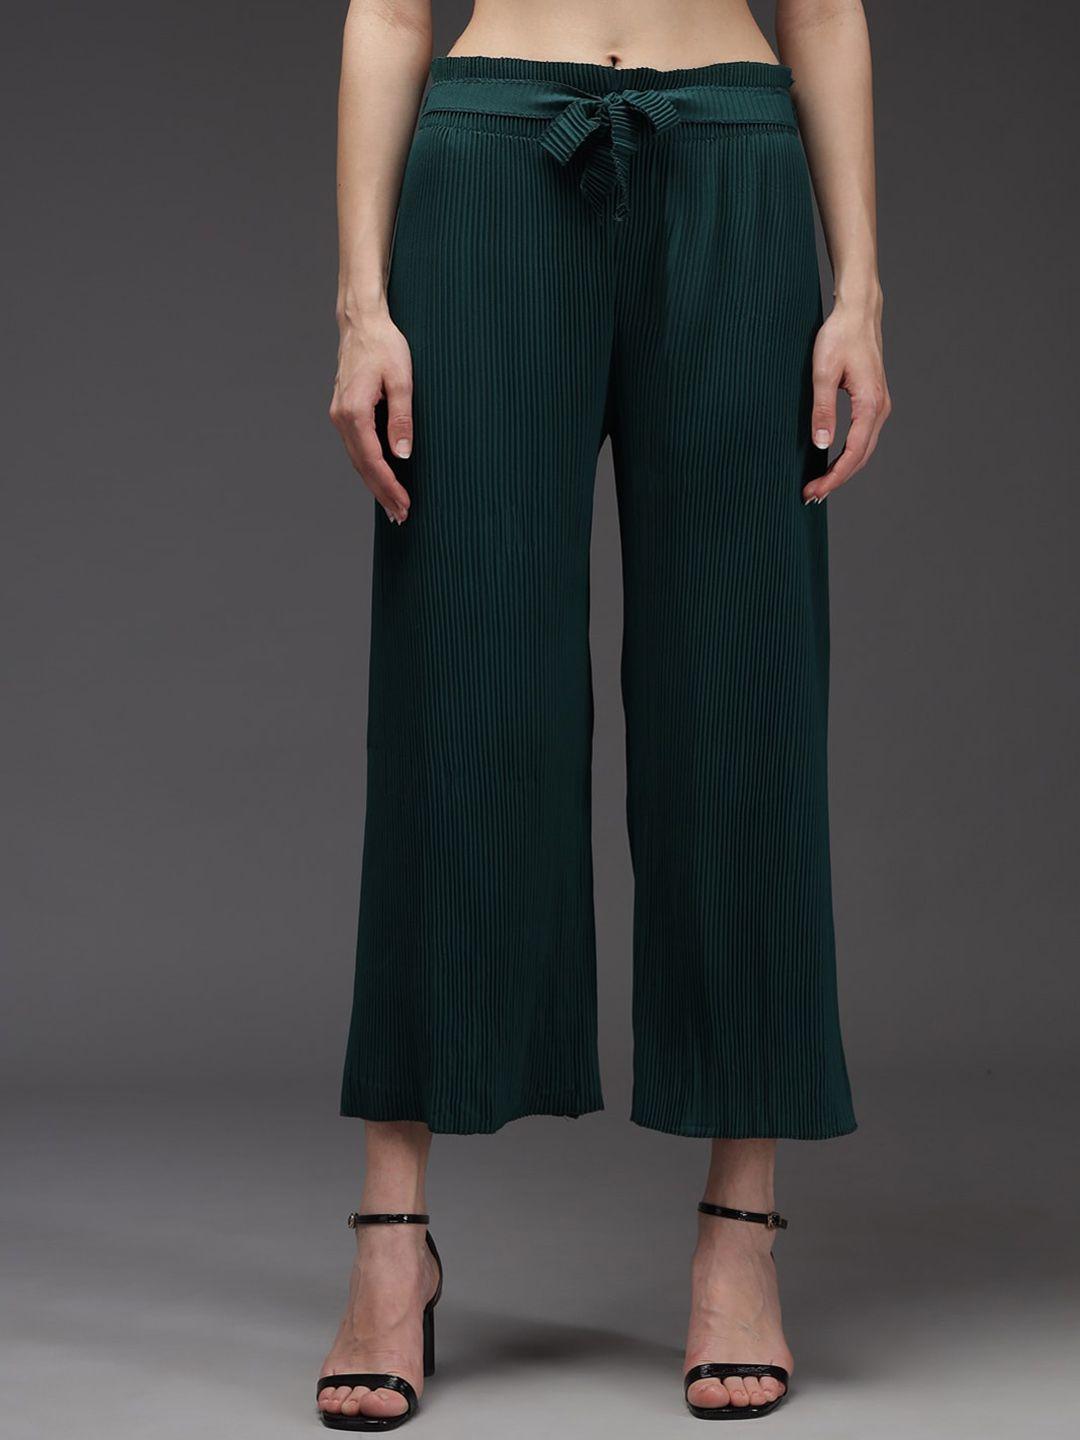 baesd women green smart culottes trousers